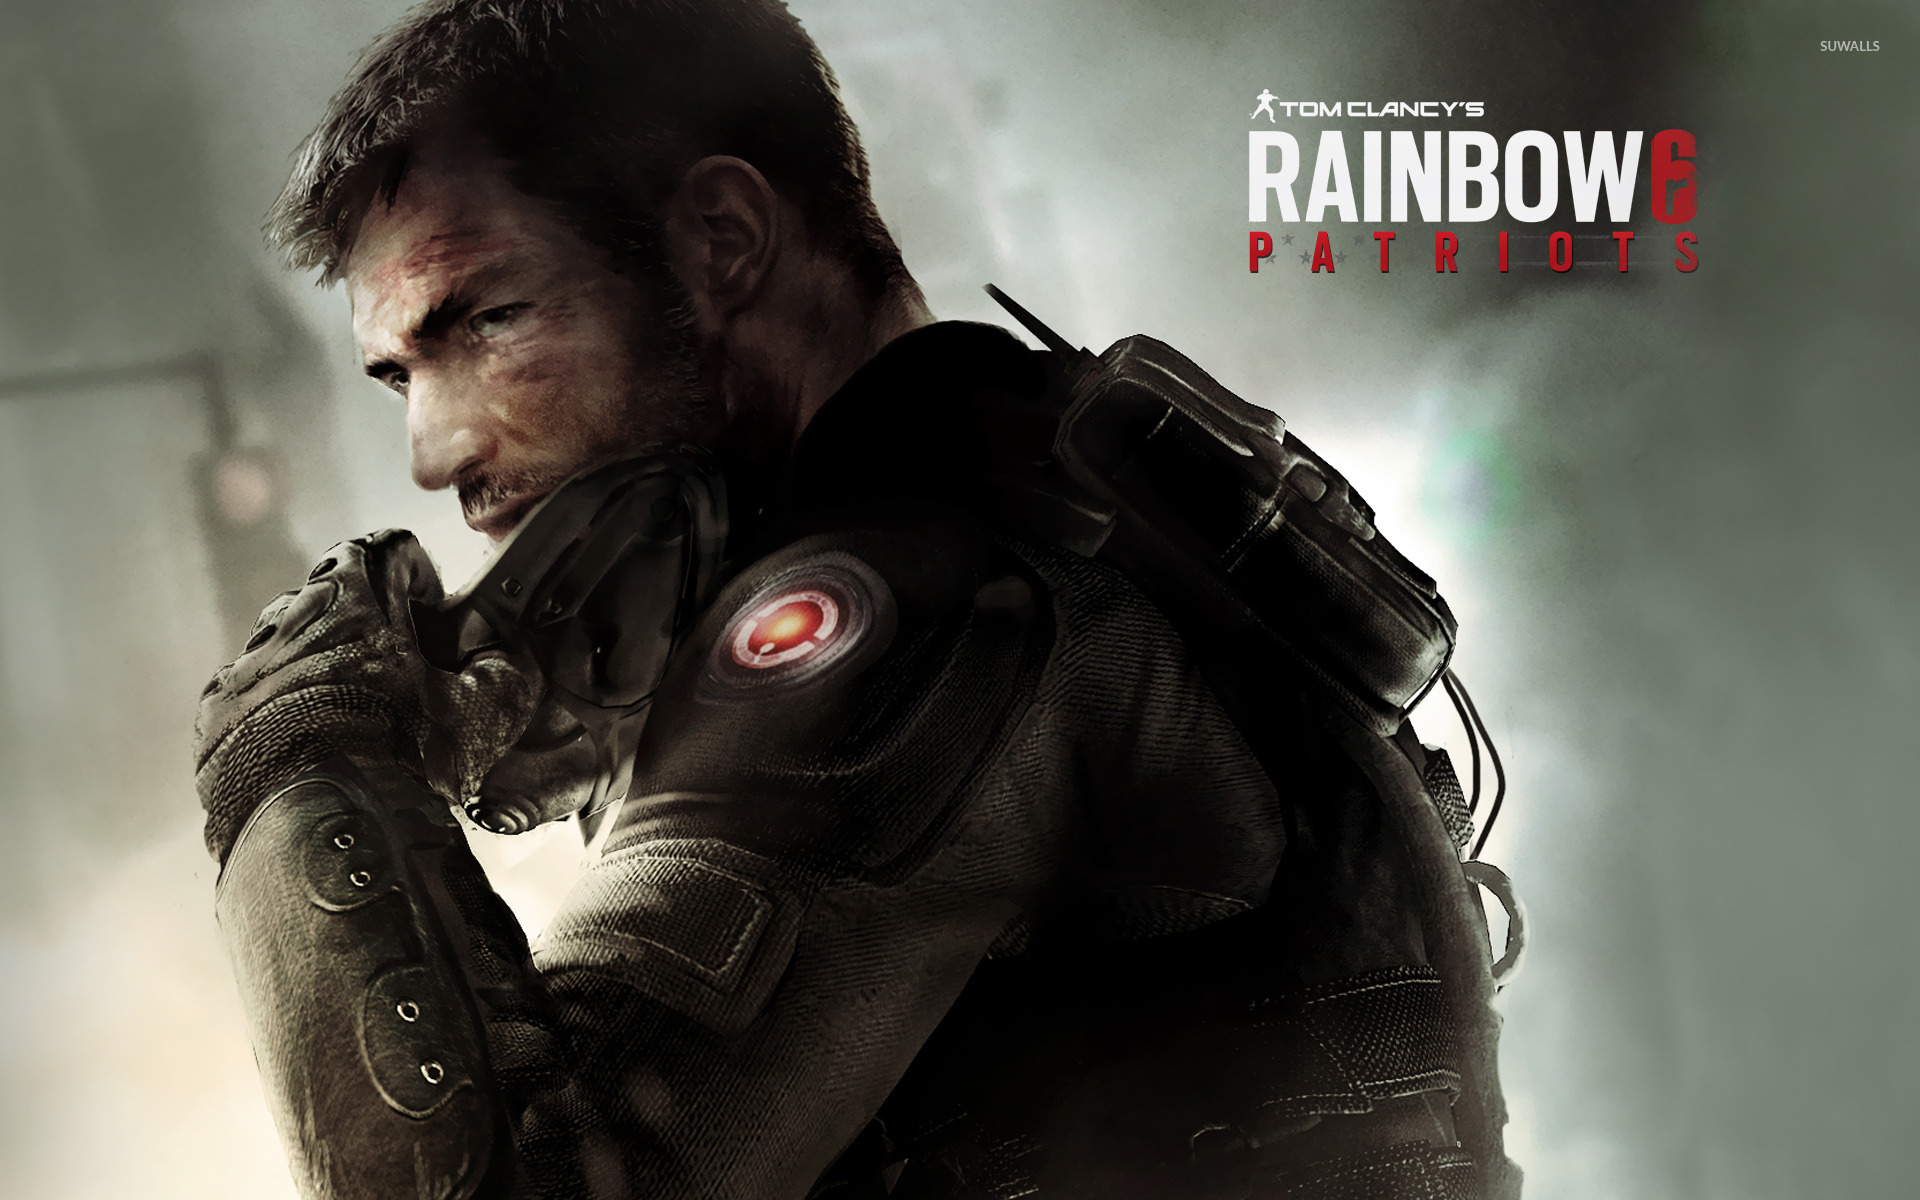 High Resolution Wallpaper | Tom Clancy's Rainbow 6: Patriots 1920x1200 px